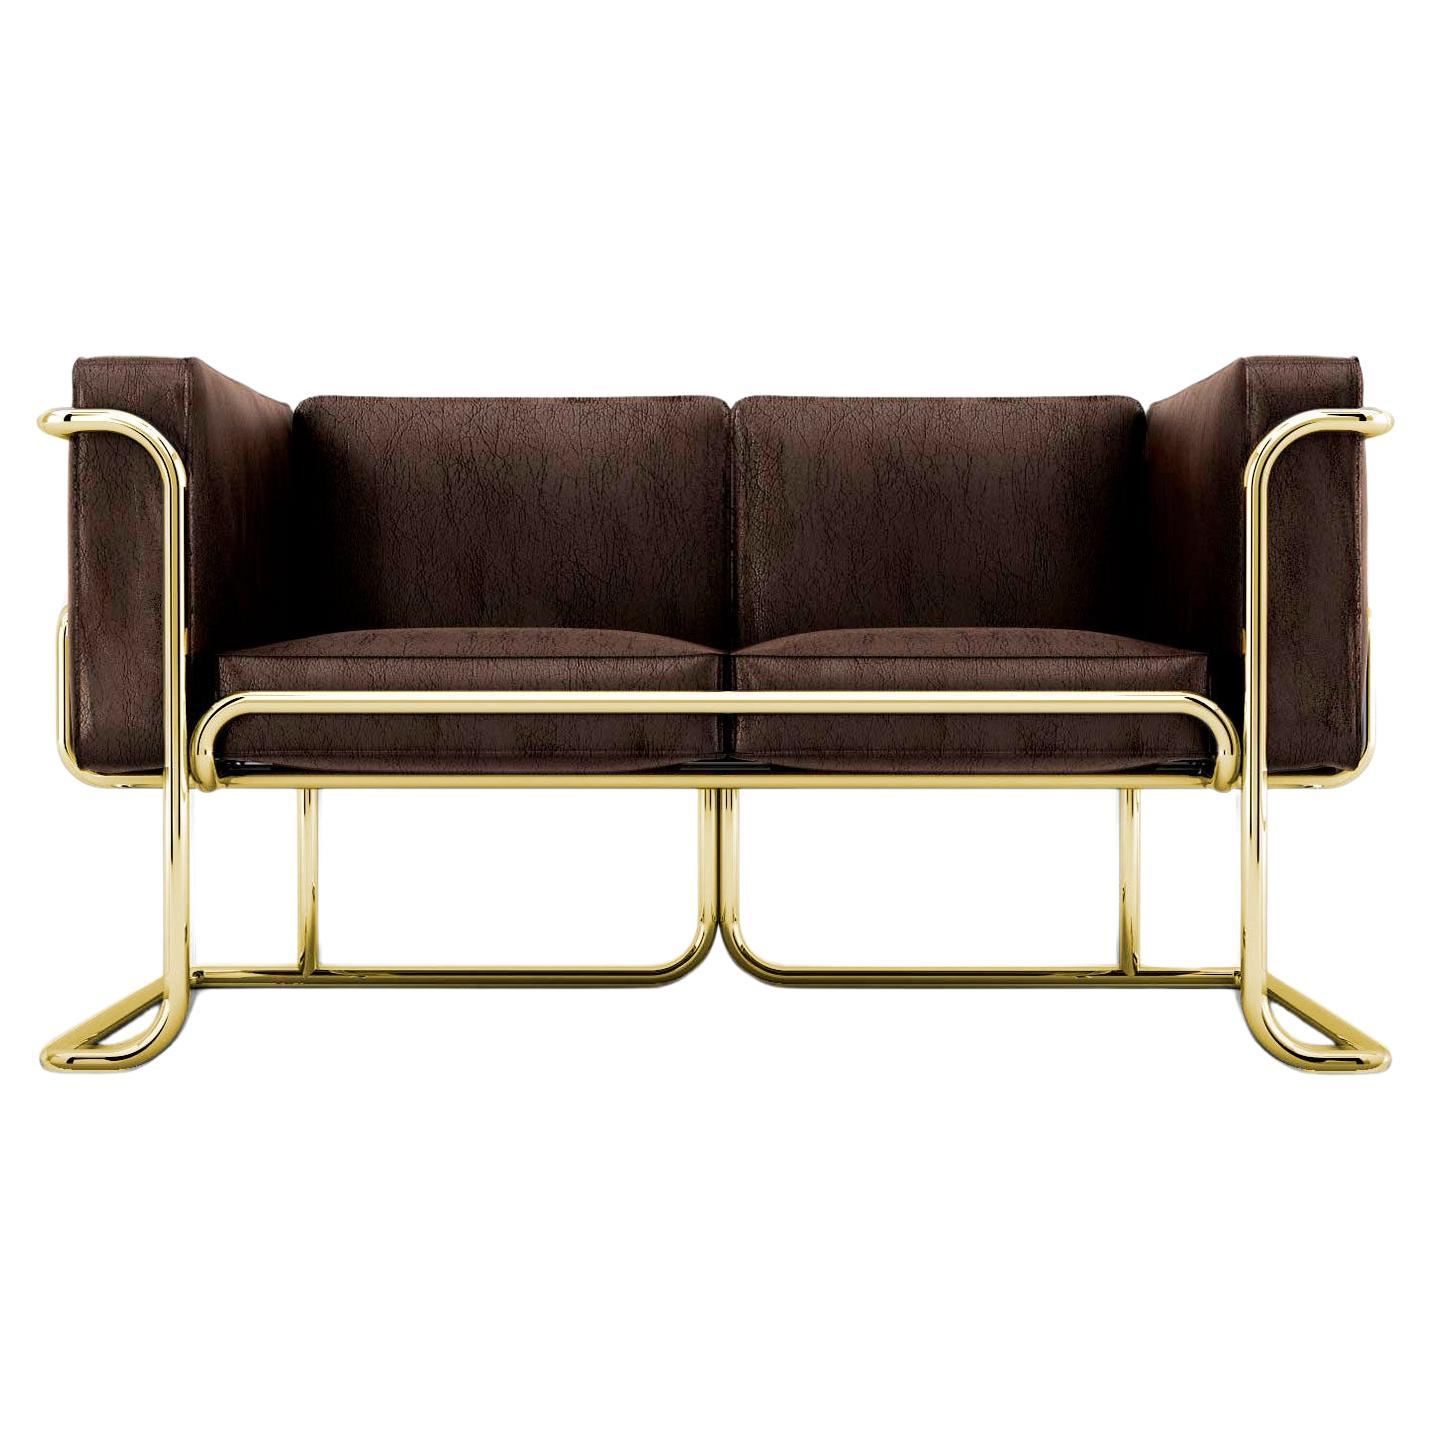 Lotus 2 Seat Sofa - Modern Brown Leather Sofa with Brass Legs